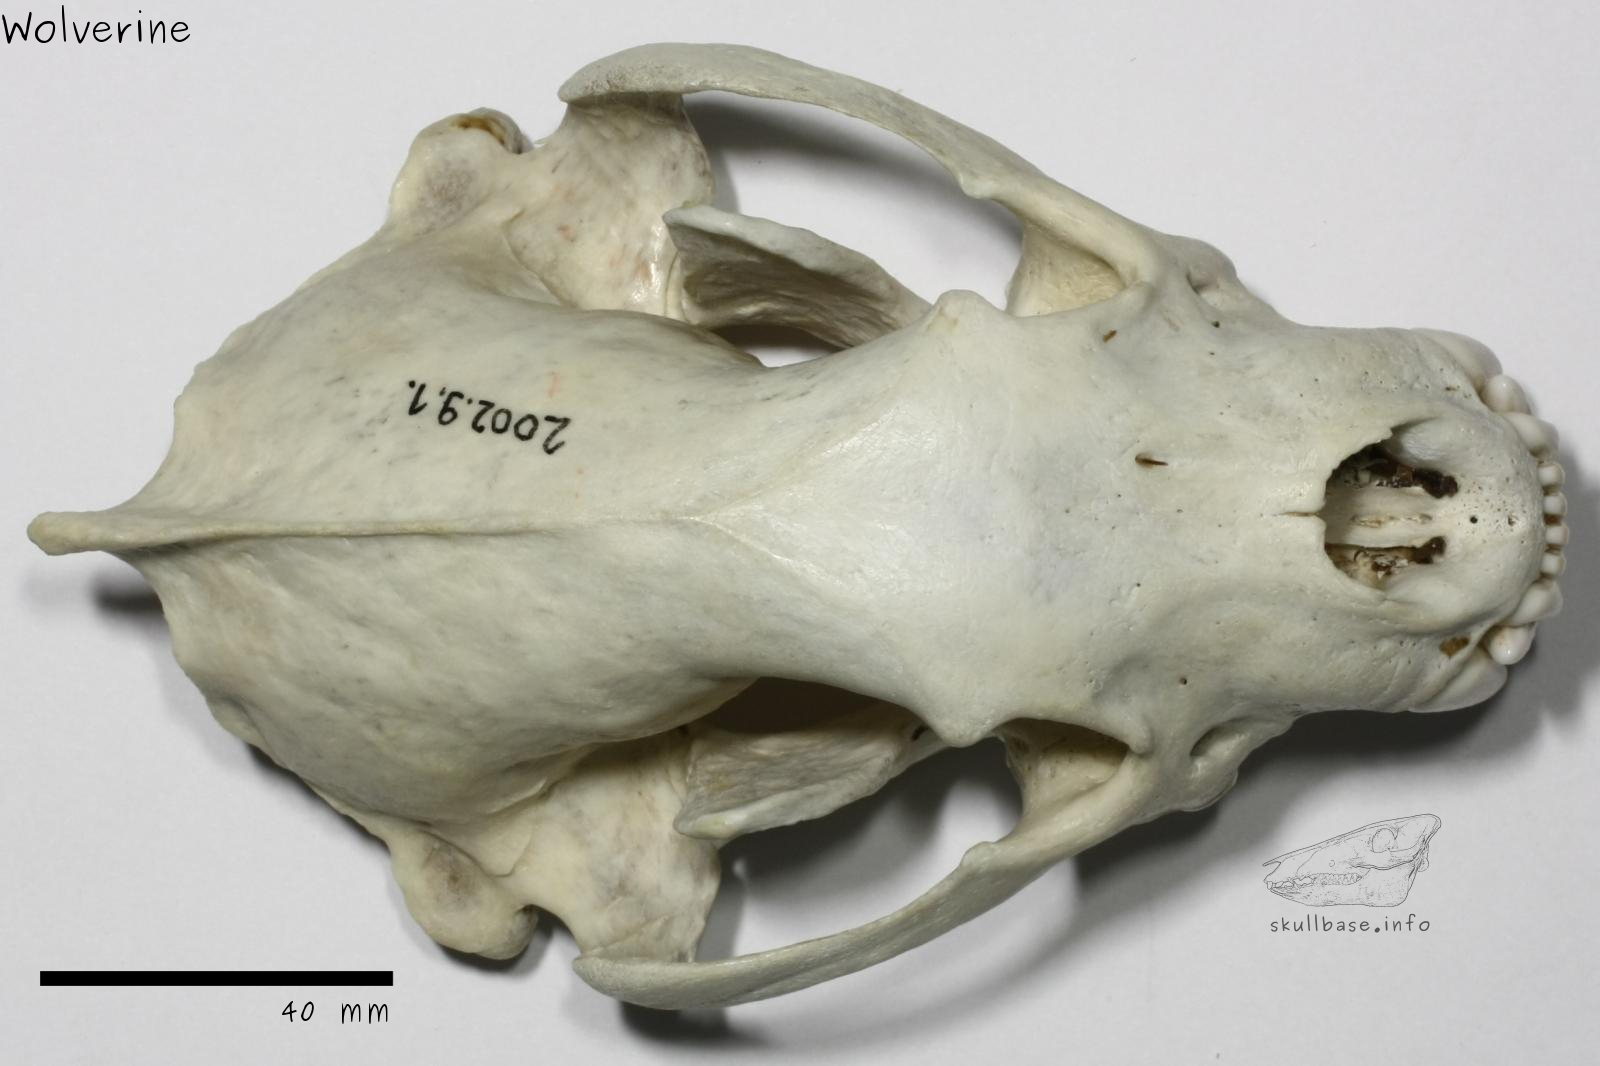 Wolverine (Gulo gulo) skull dorsal view